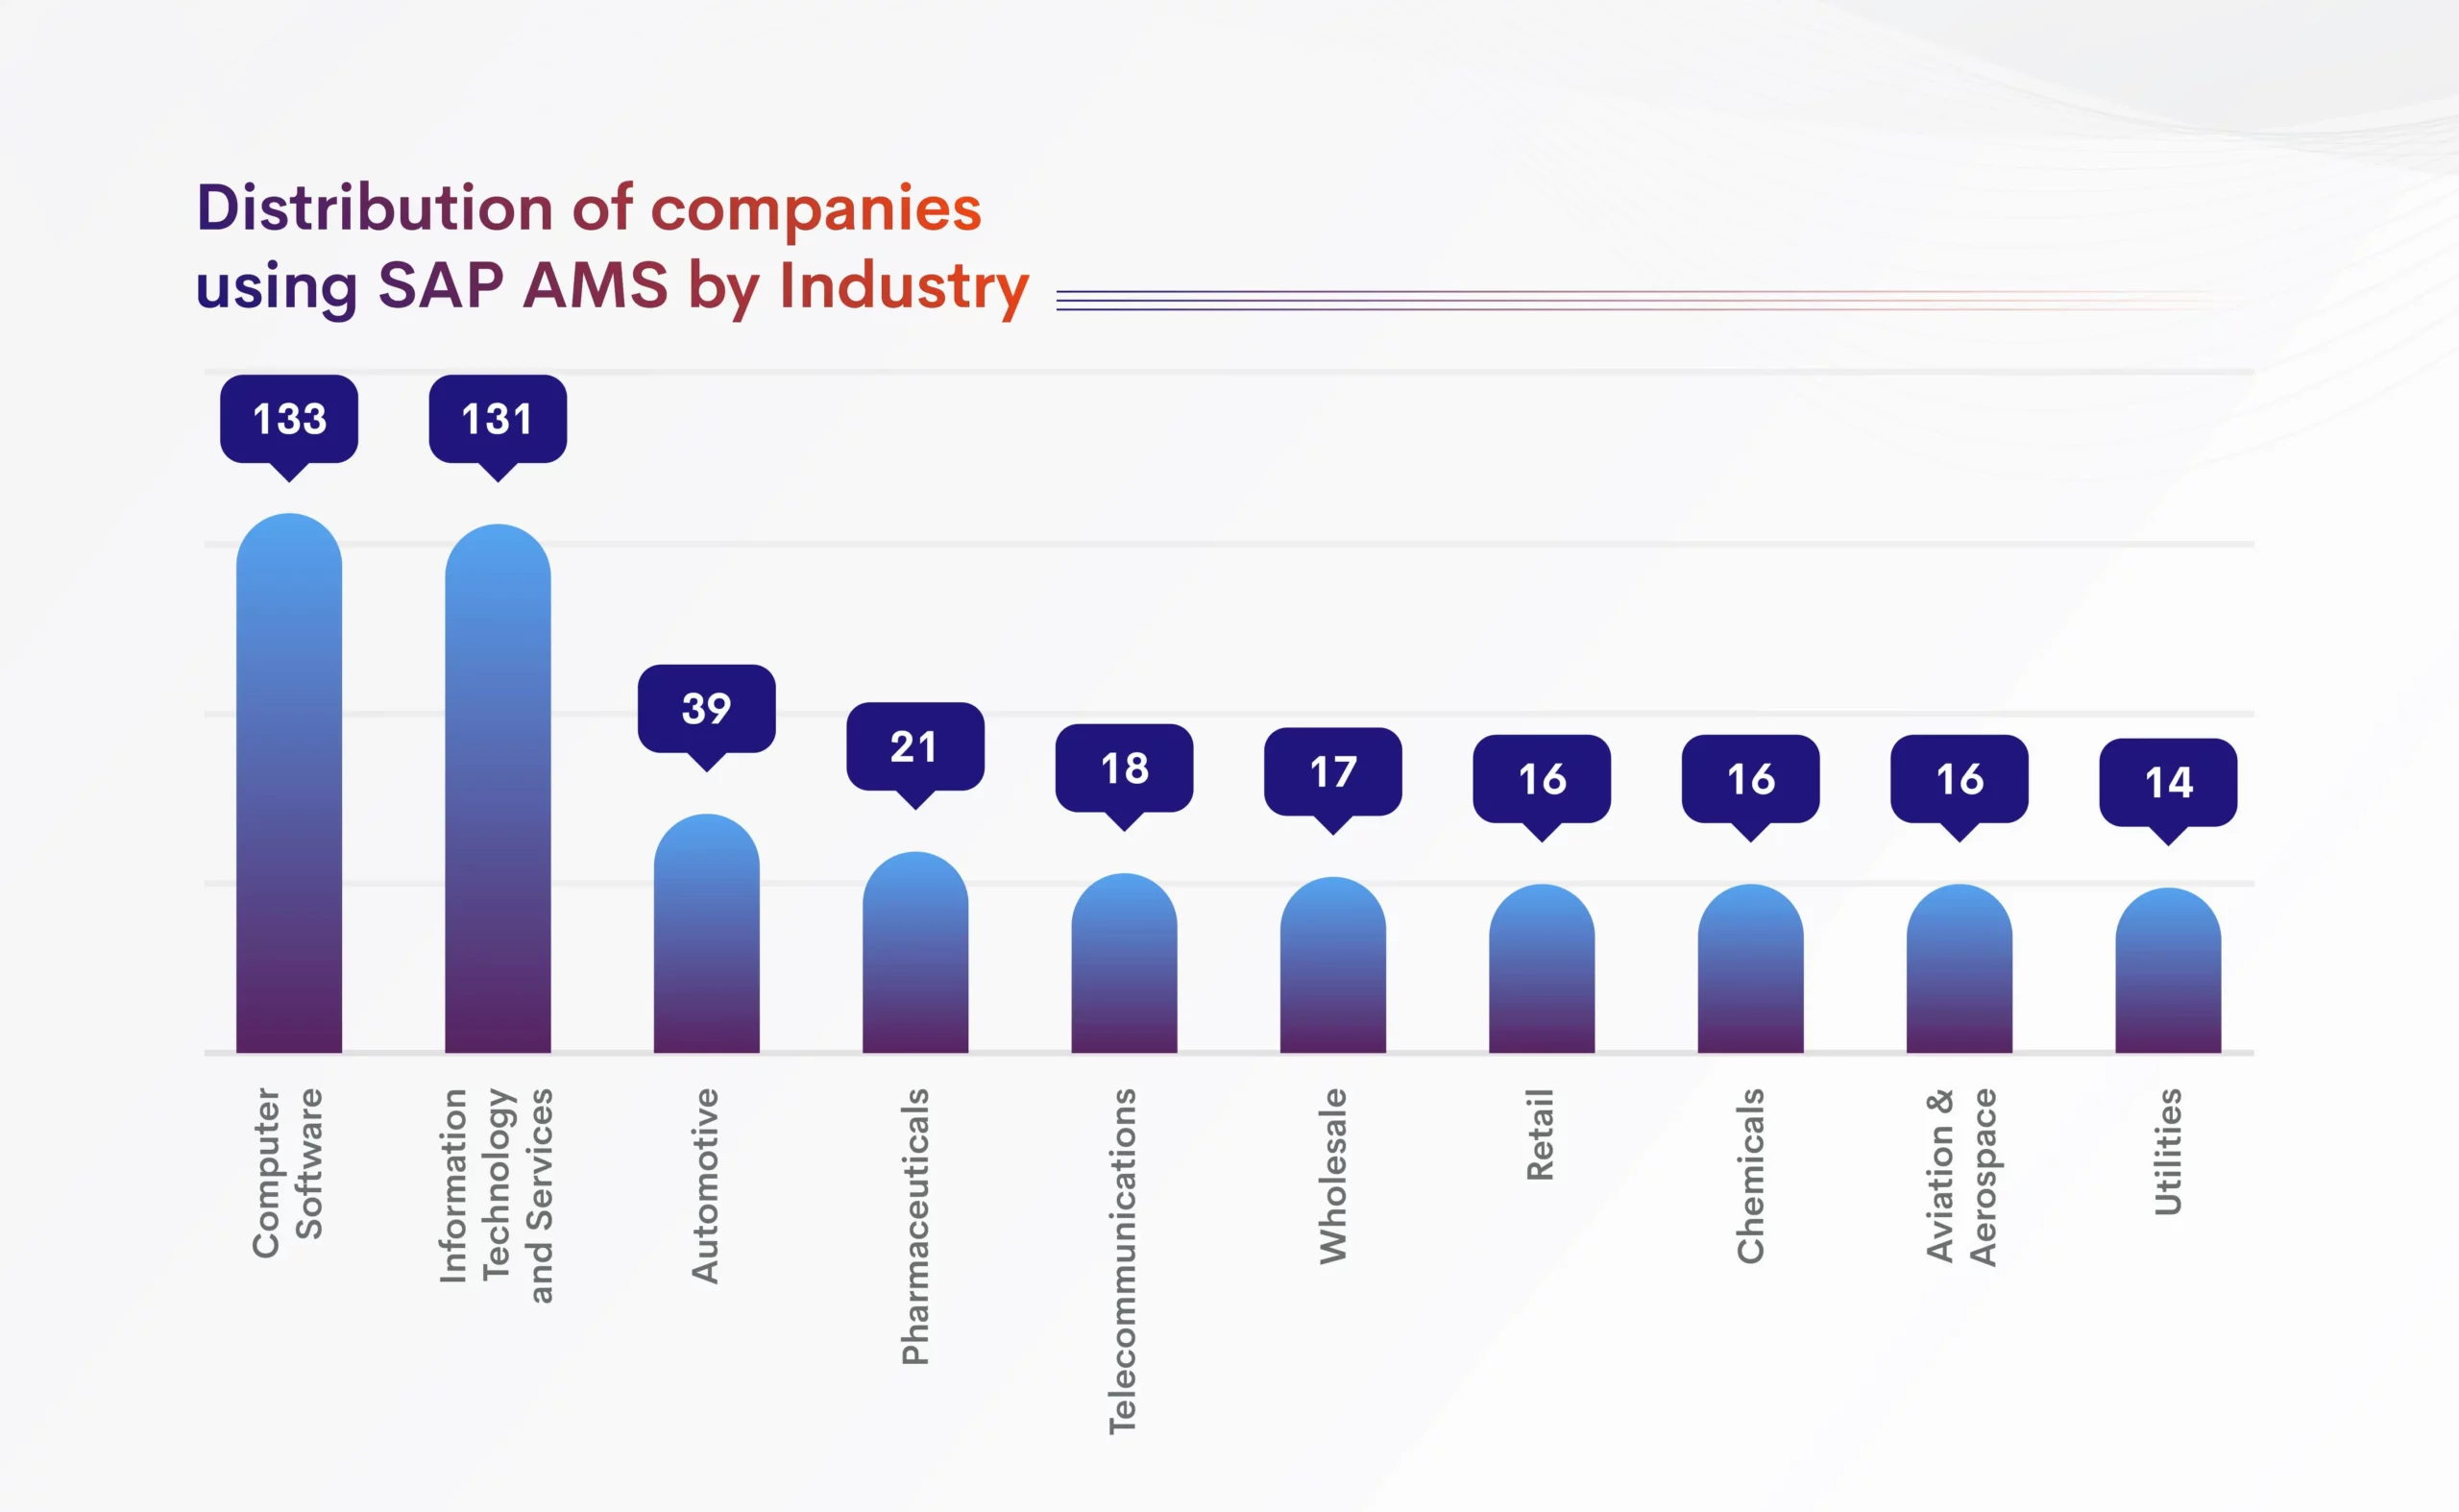 SAP application management support services (AMS) - An insider 